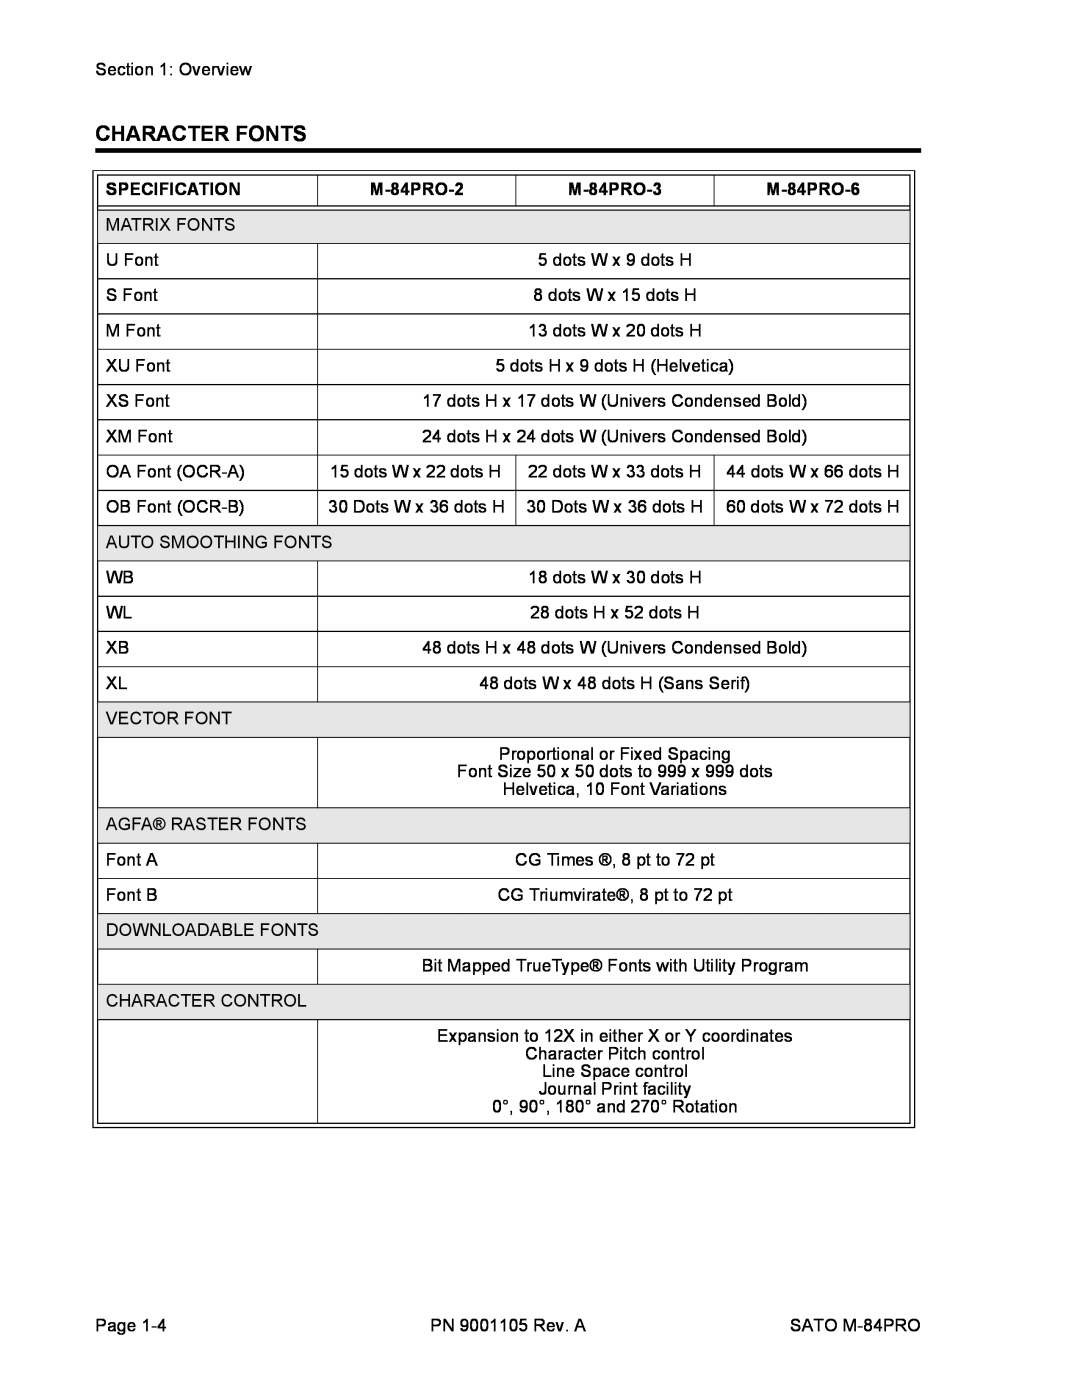 SATO manual Character Fonts, Specification, M-84PRO-2, M-84PRO-3, M-84PRO-6 